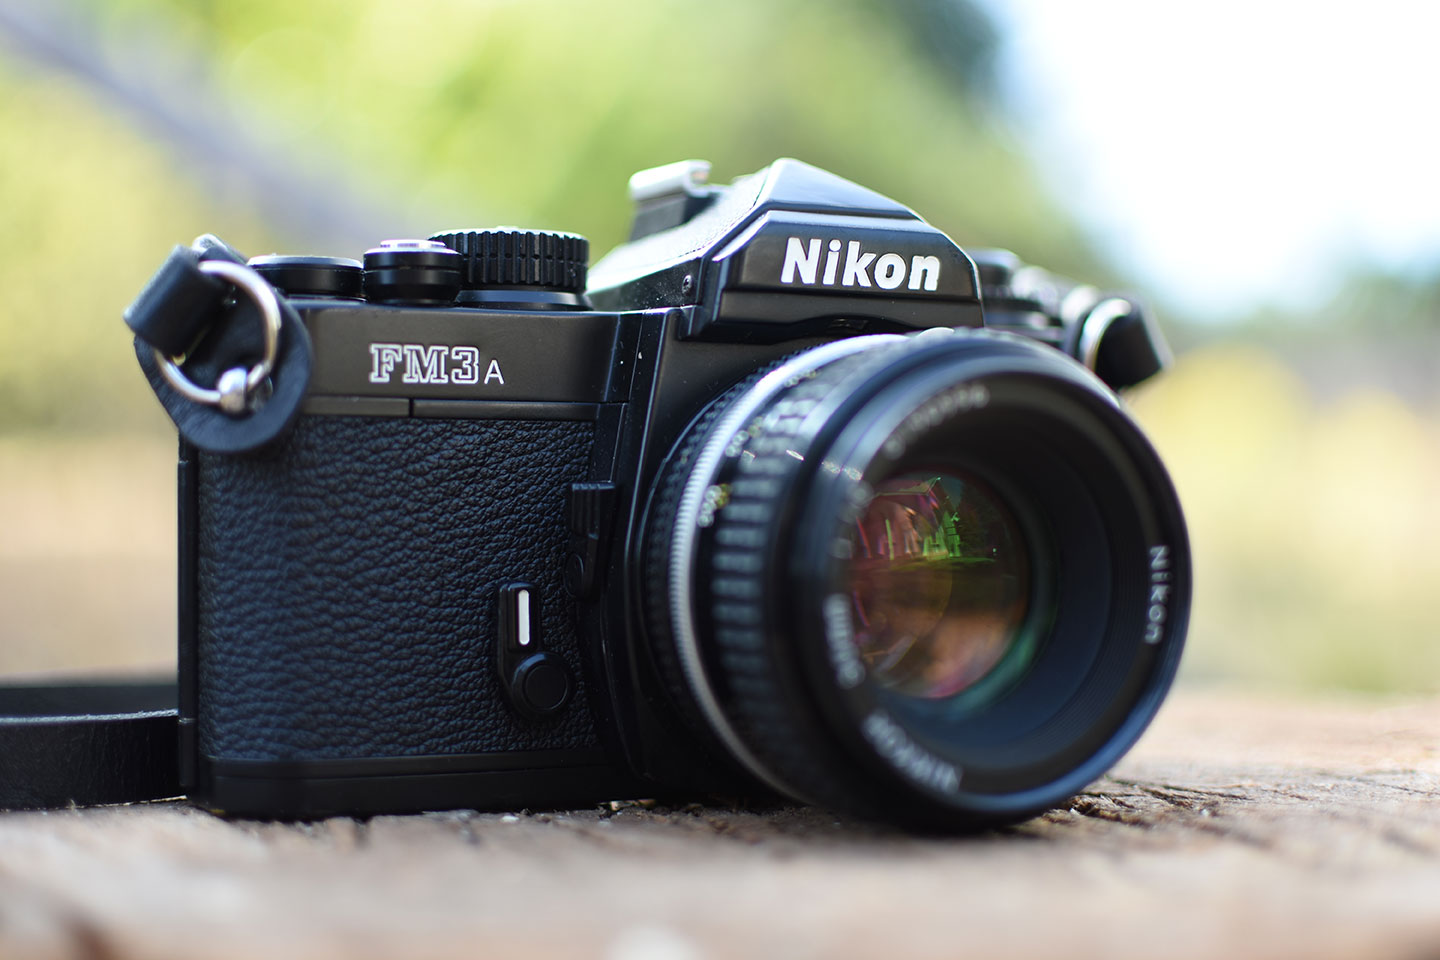 The Nikon FM3A film camera